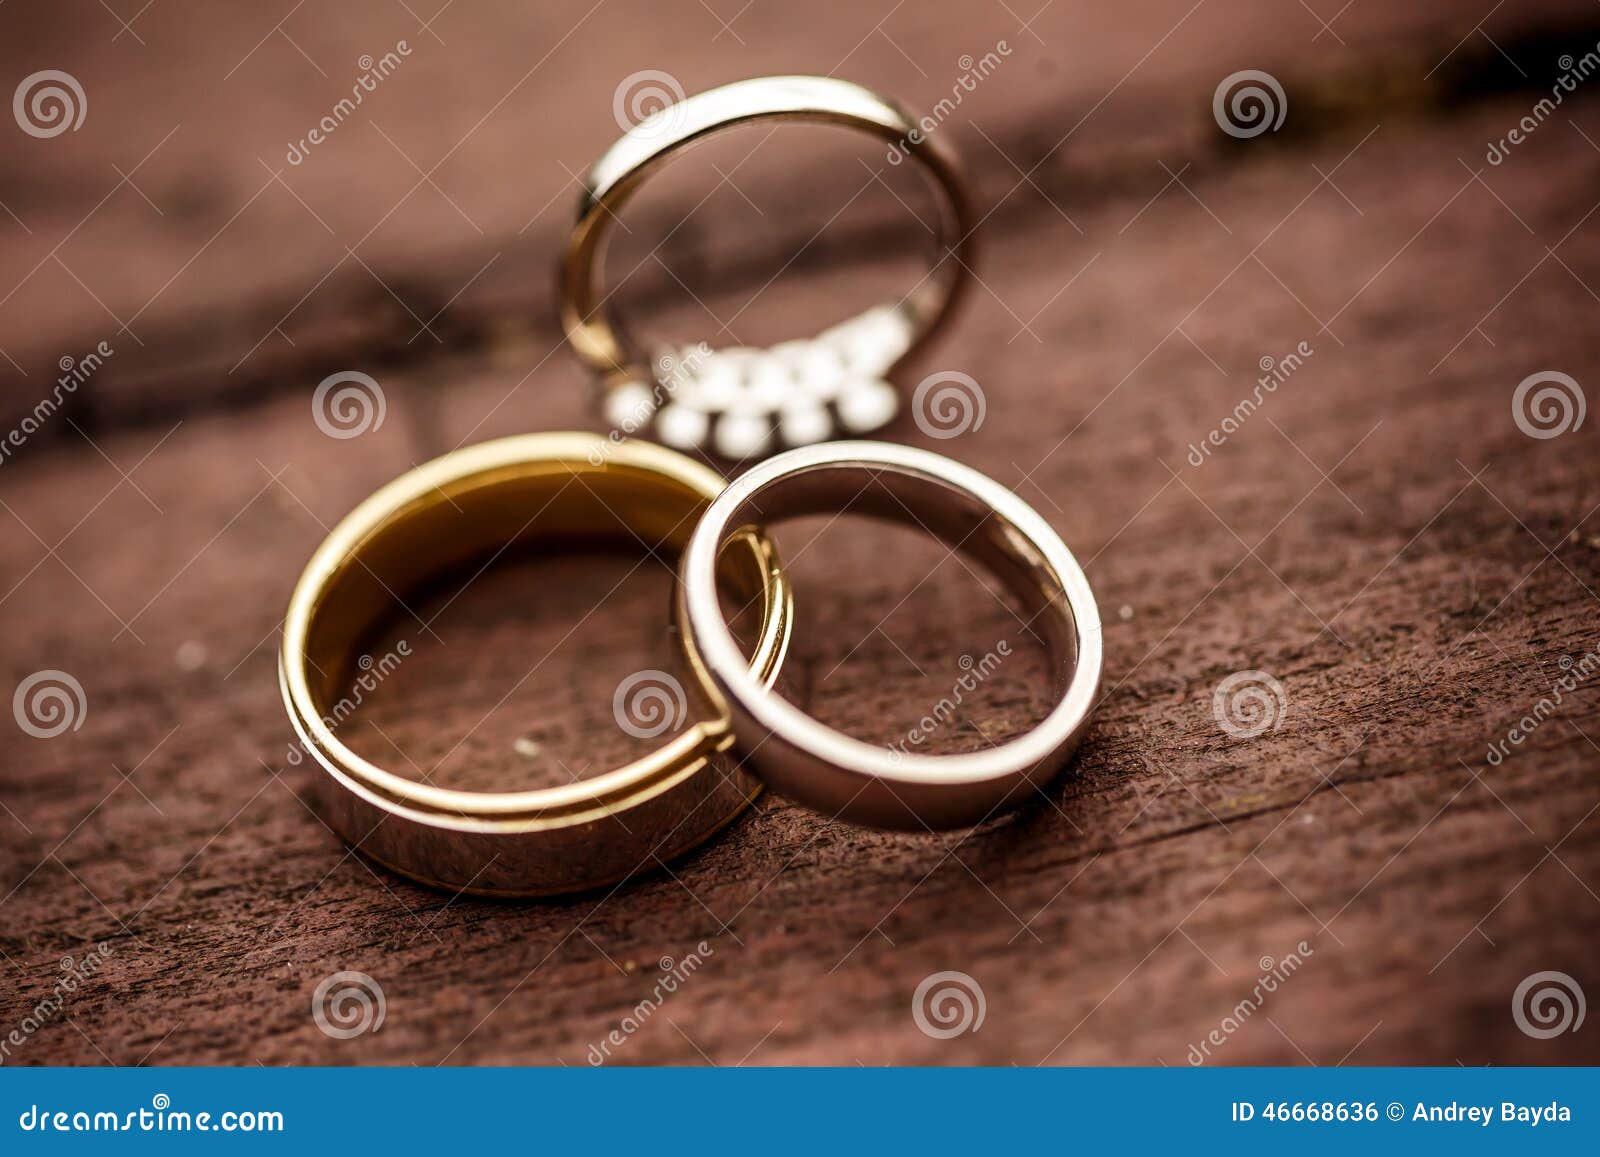 Three wedding rings stock photo. Image of fiancee, decoration - 46668636